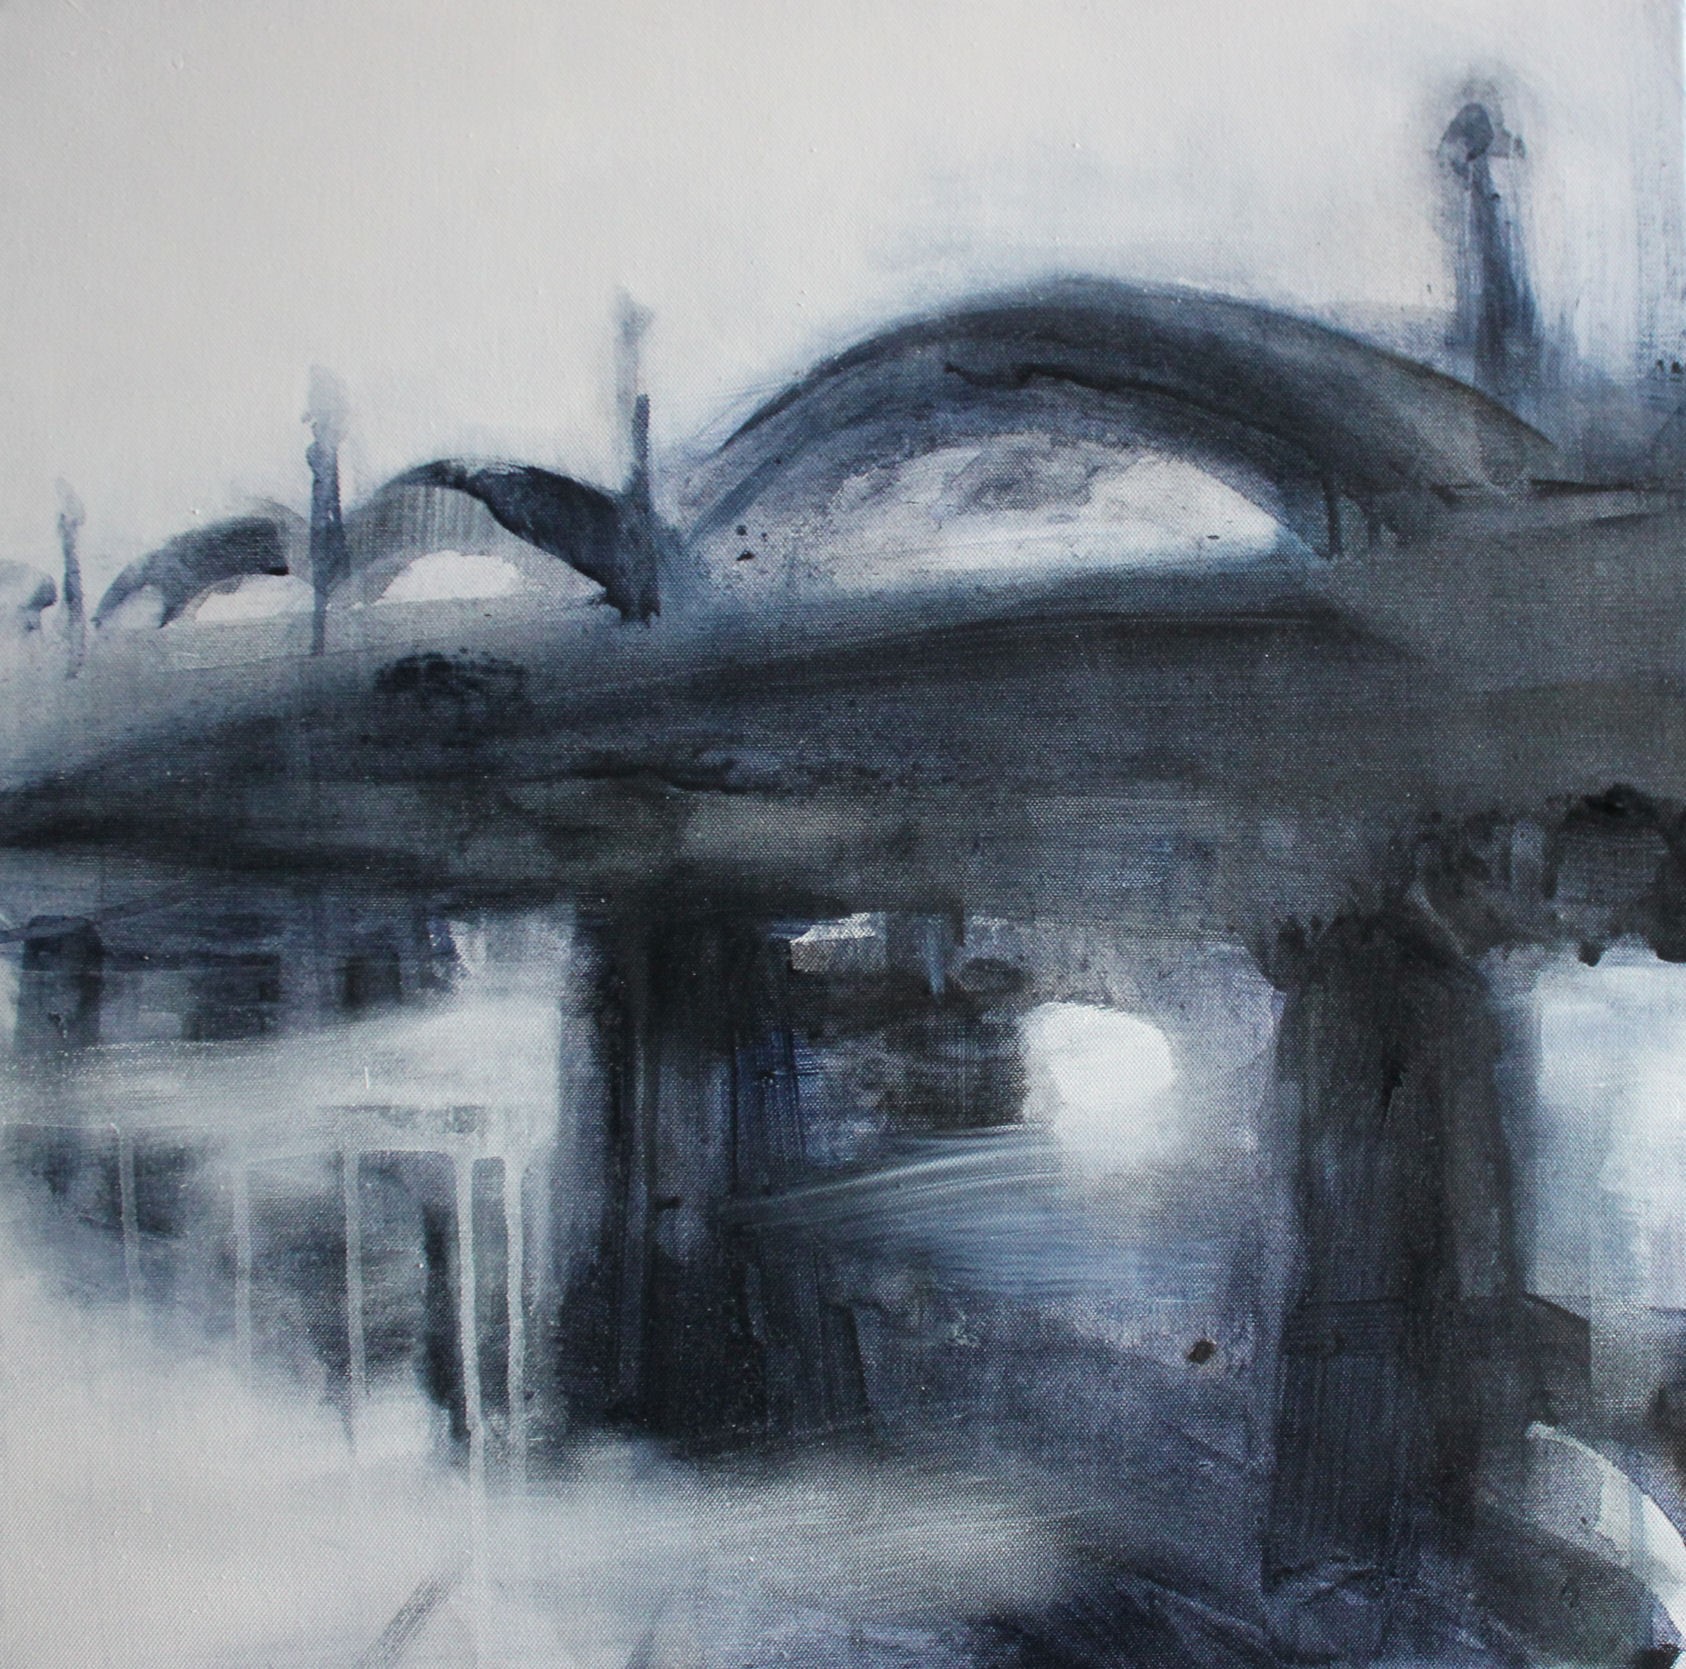 'The Bridge, High Tide Rain' by artist Jim Campbell